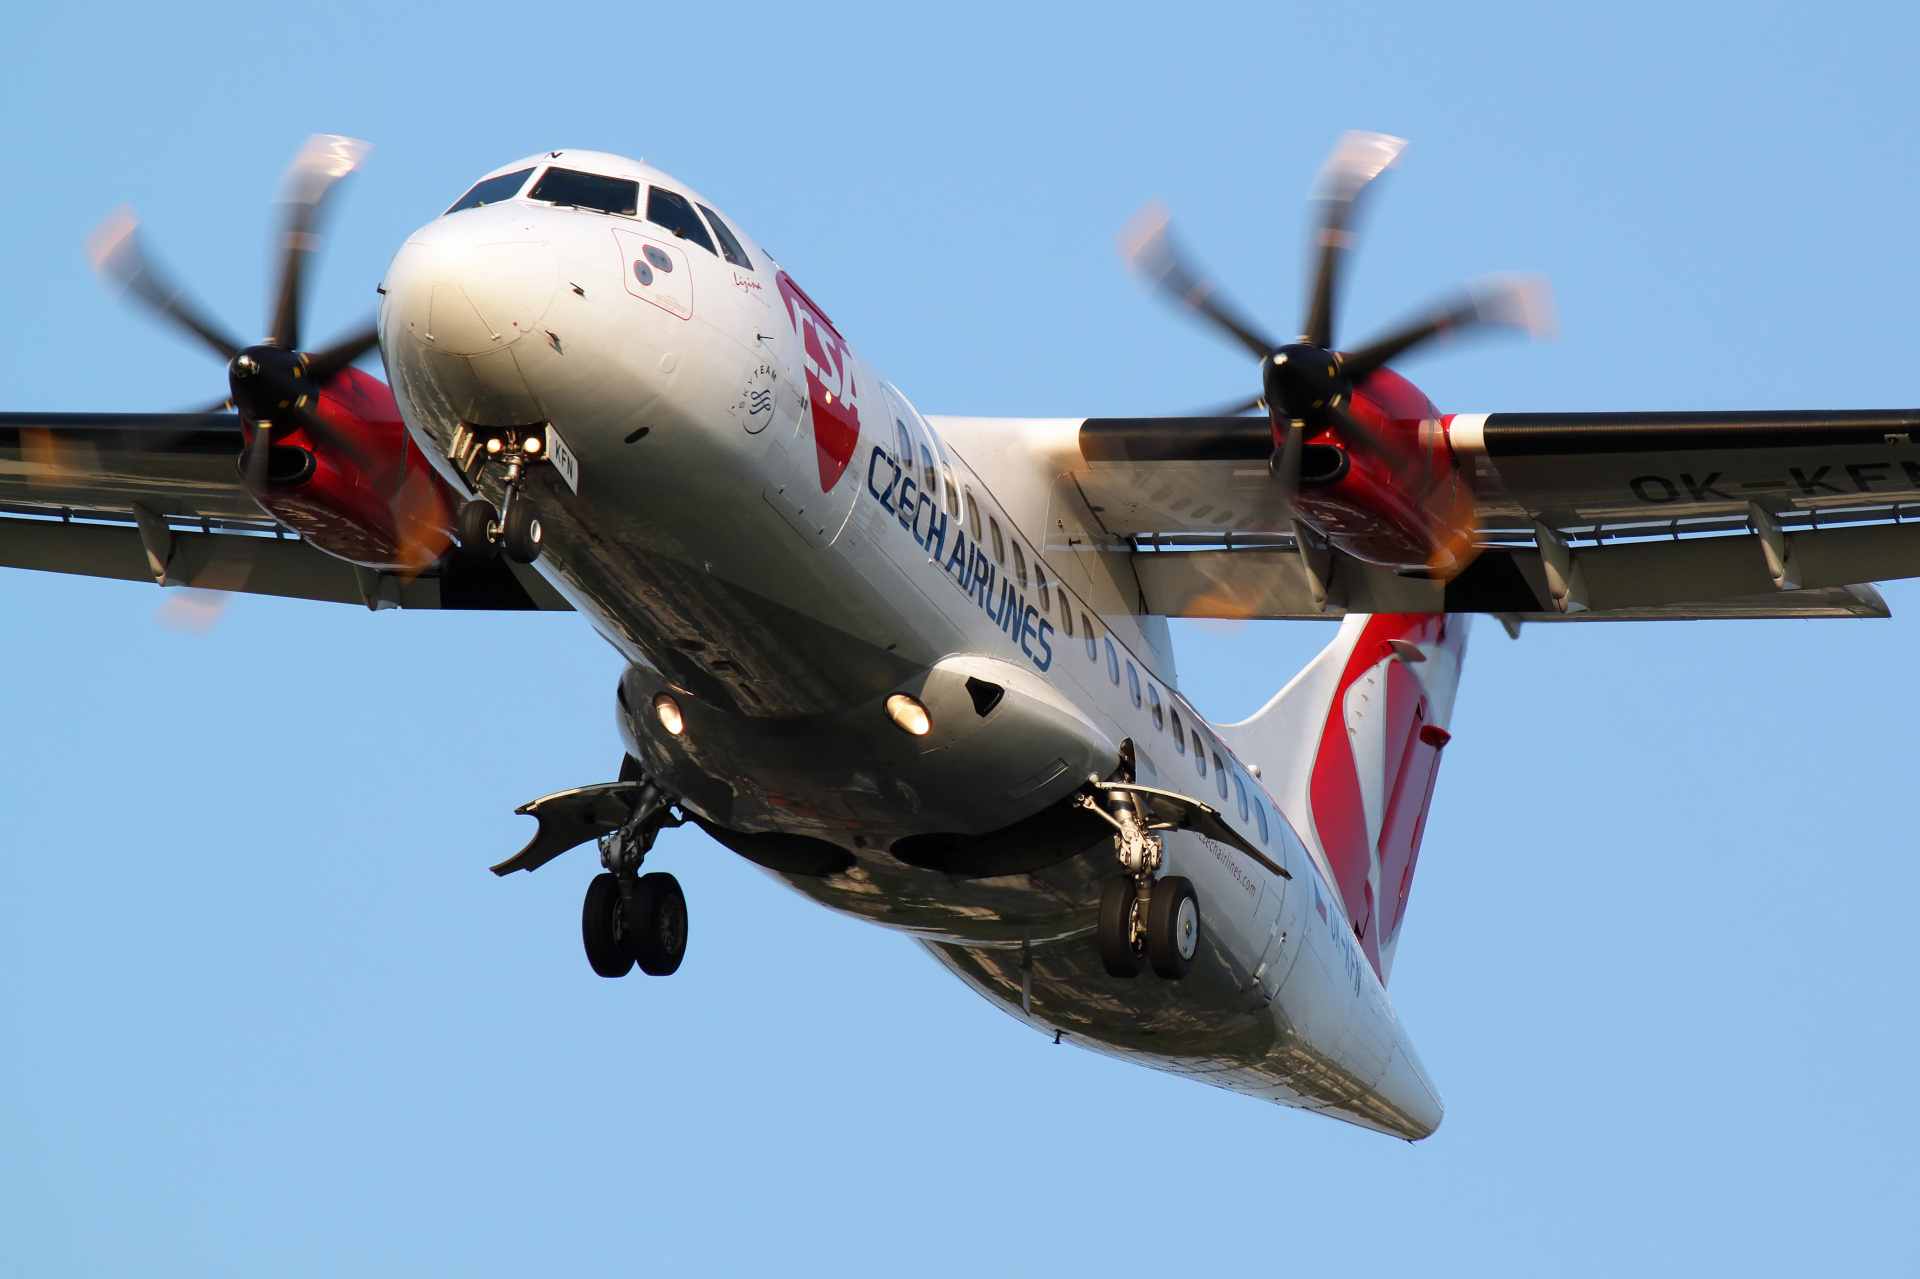 OK-KFN (new livery) (Aircraft » EPWA Spotting » ATR 42 » CSA Czech Airlines)